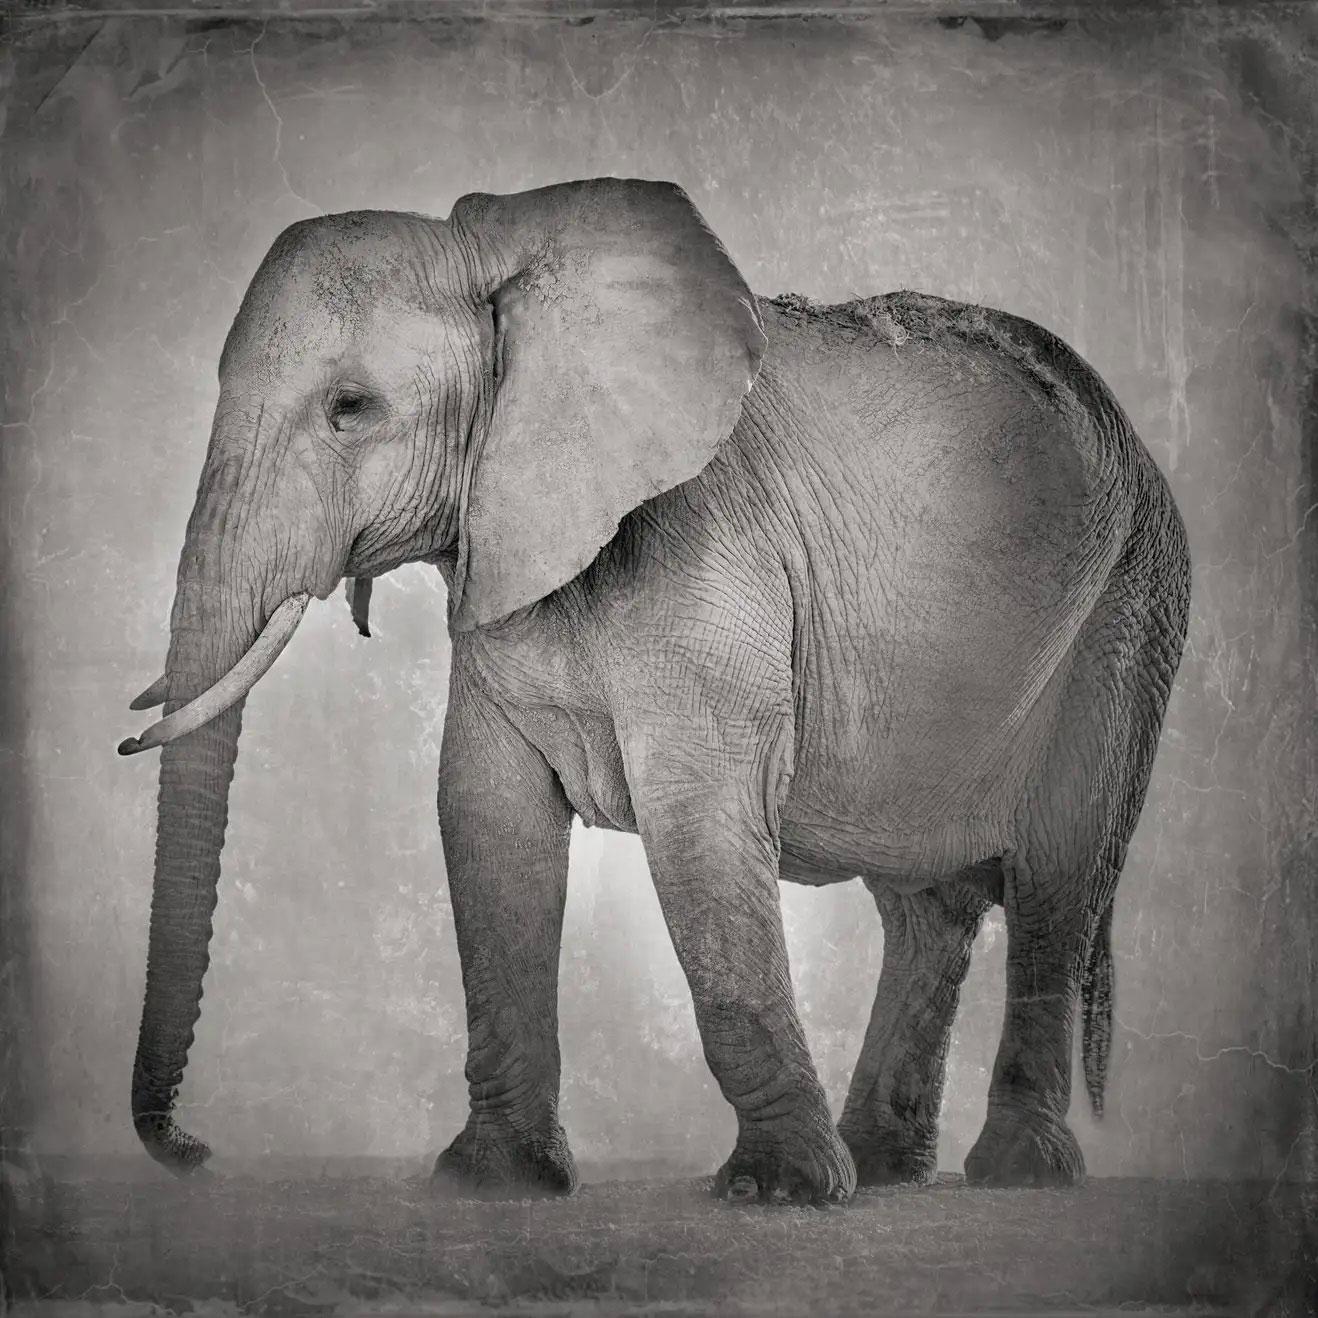 David Burdeny - Resting Elephant, Amboseli, Kenya, Africa (BW Photograph) 
Archival Pigment Print
Signature Label

Ask us for framing options.

